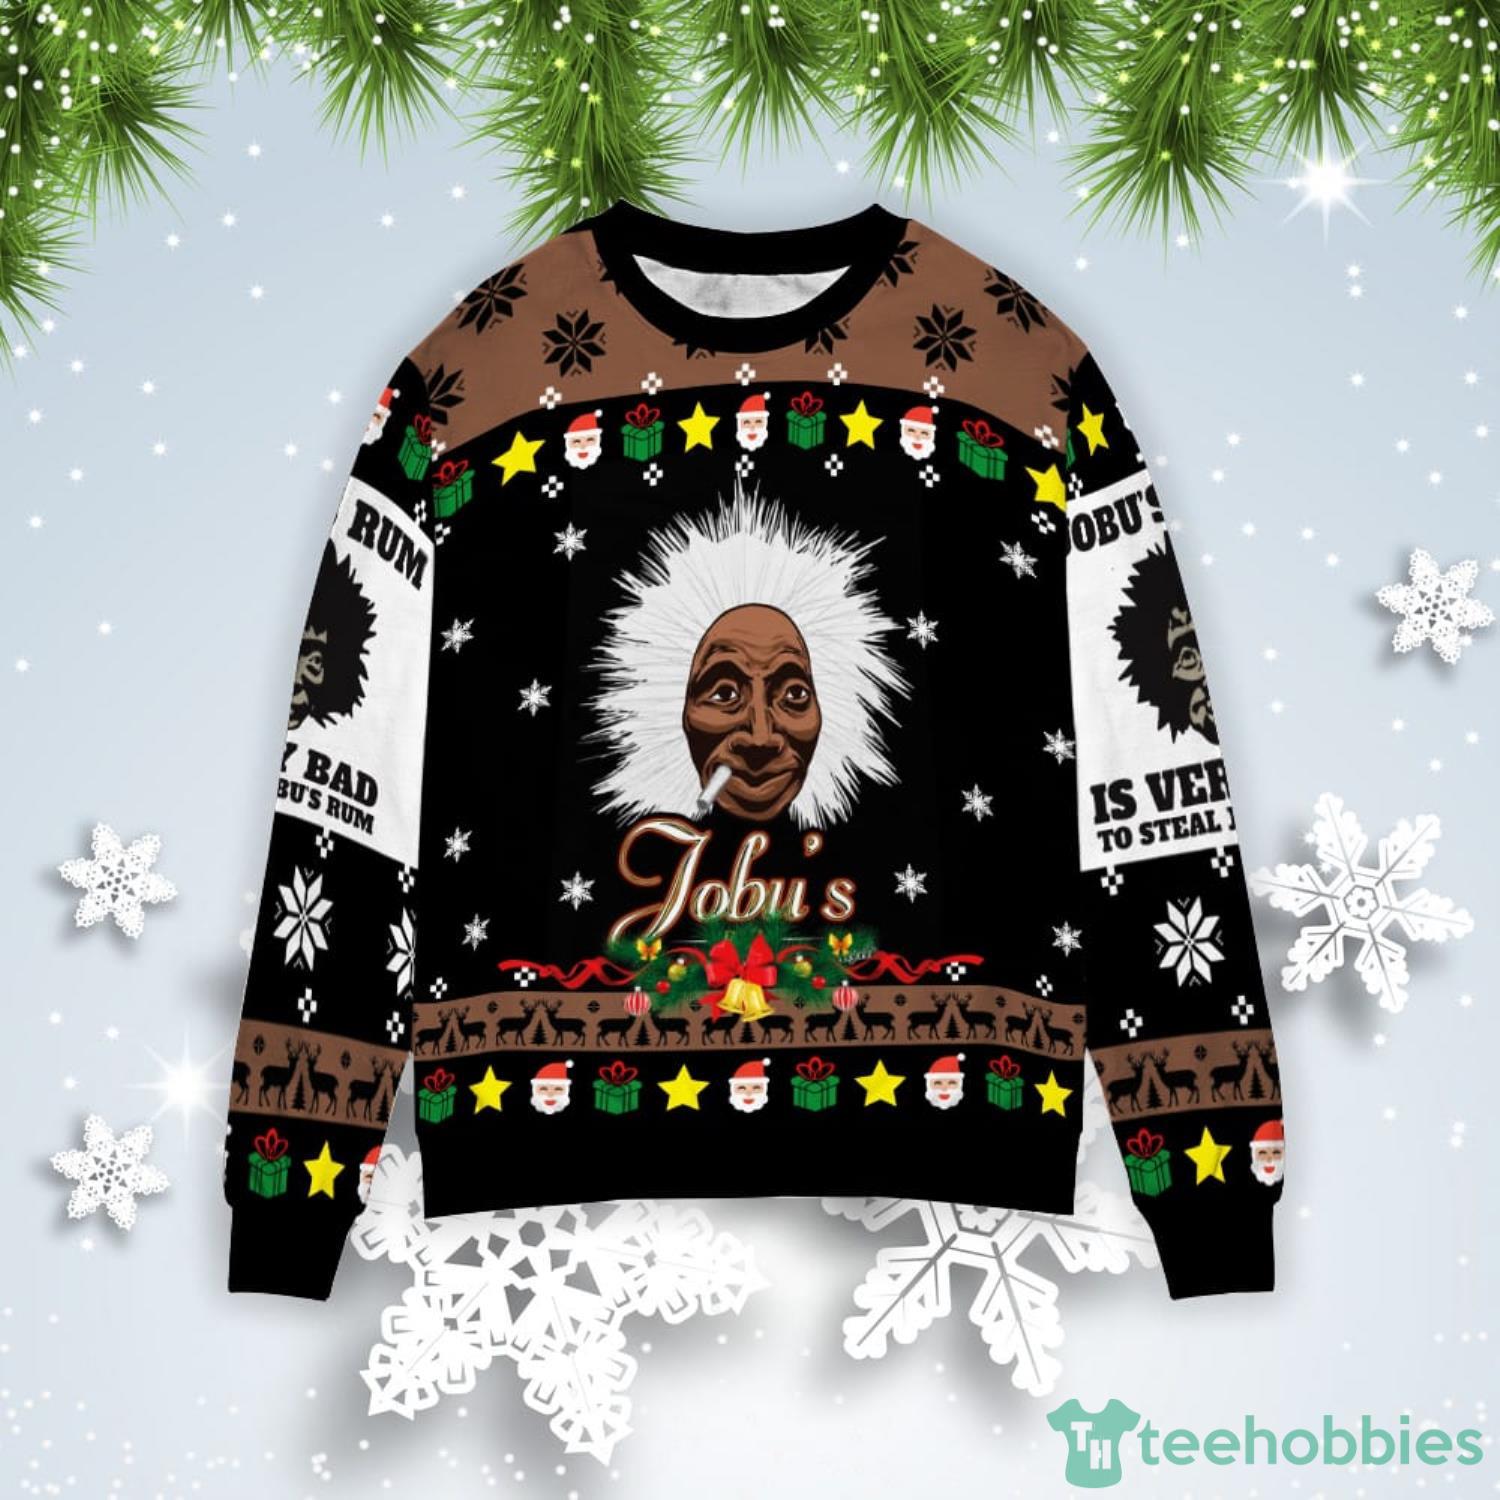 Jobu’s Rum Christmas Gift Ugly Christmas Sweater Product Photo 1